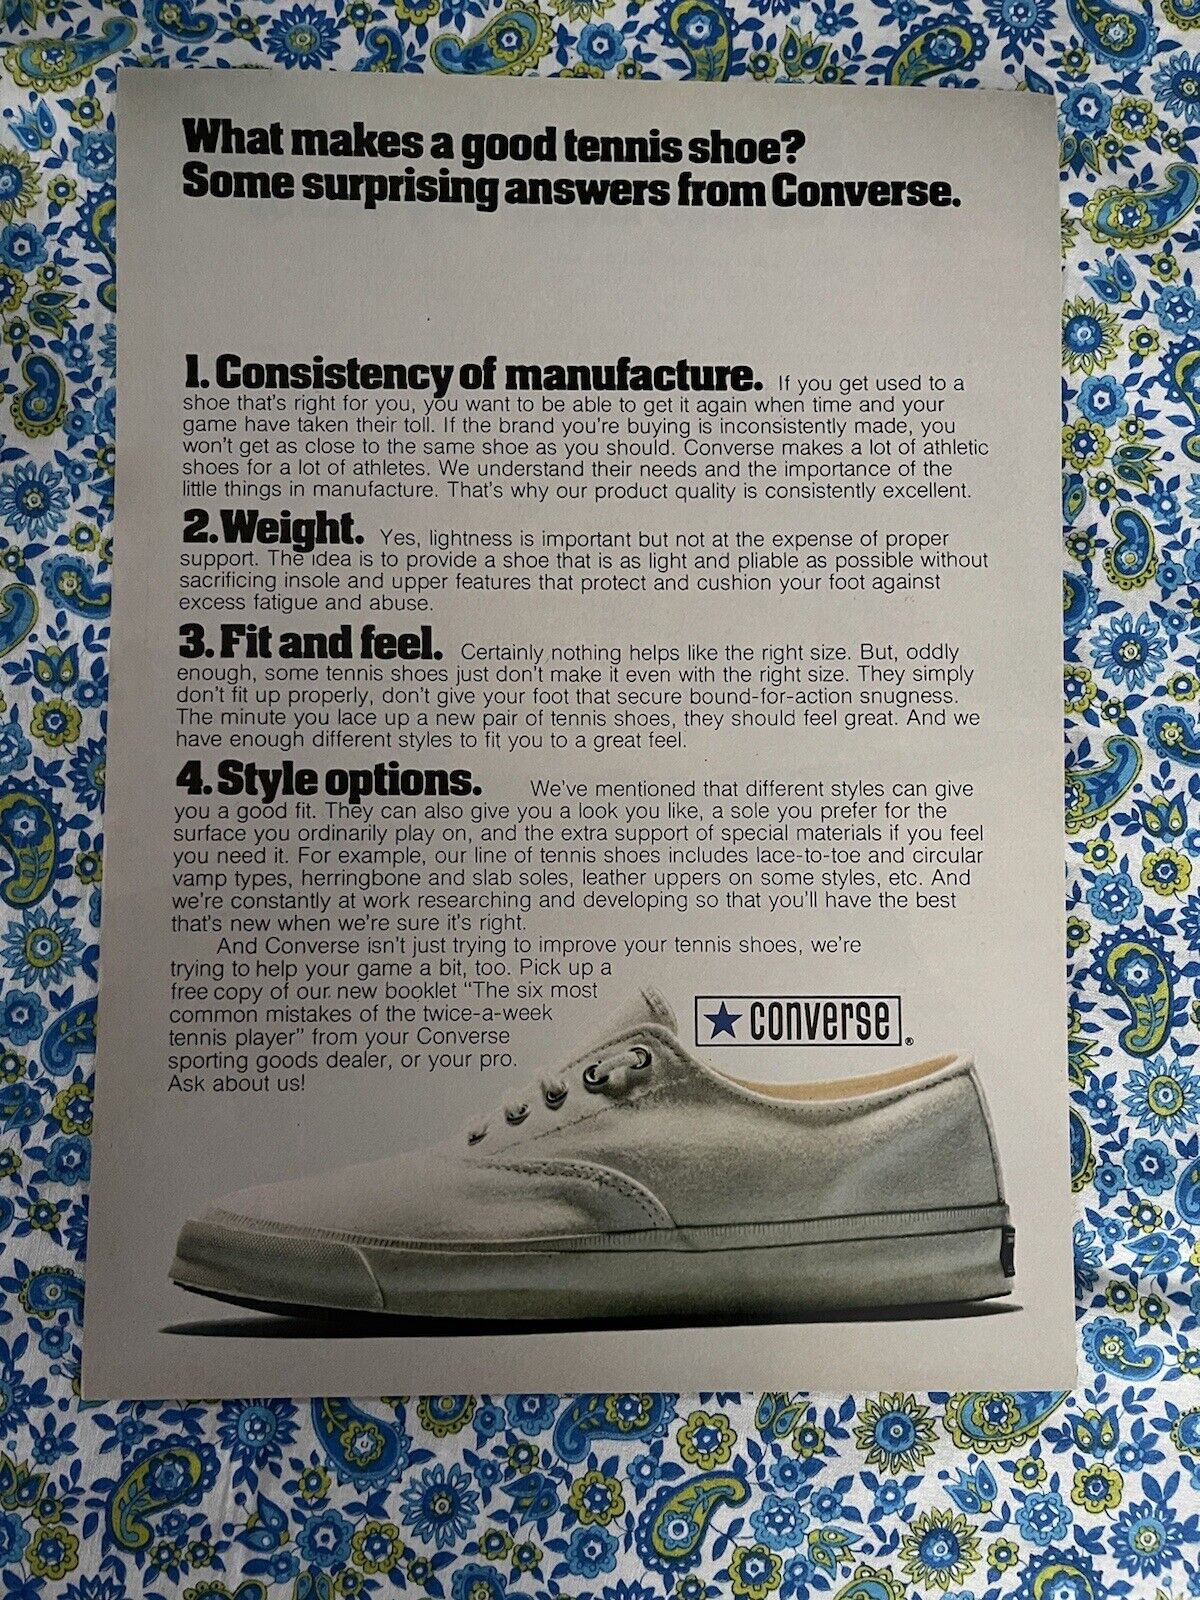 Vintage 1973 Converse Tennis Shoes Print Ad What Makes A Good Tennis Shoe?